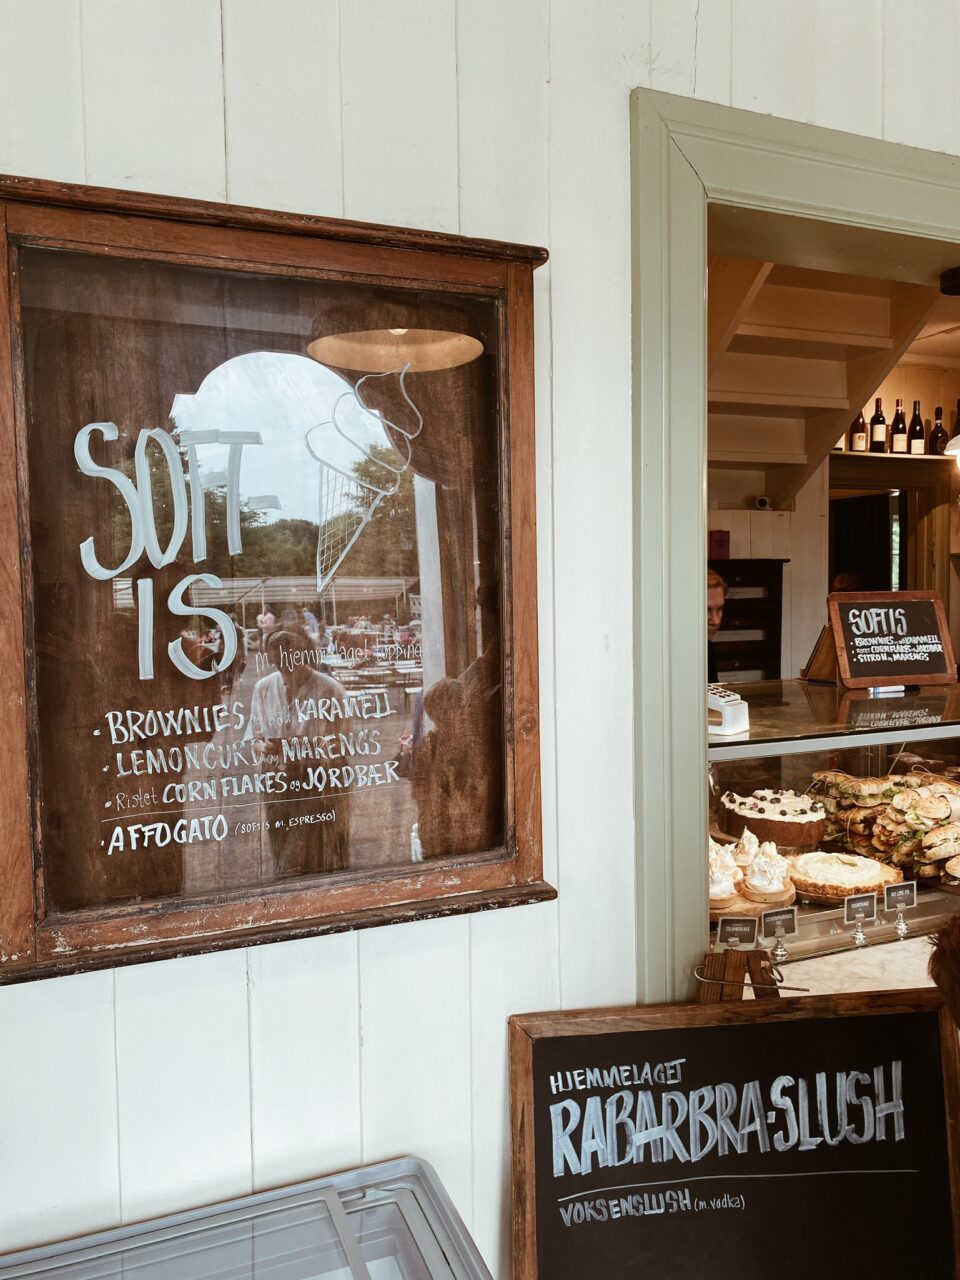 Et stort skilt hvor det står "Soft is" hengende på en vegg i en liten cafe. Foto